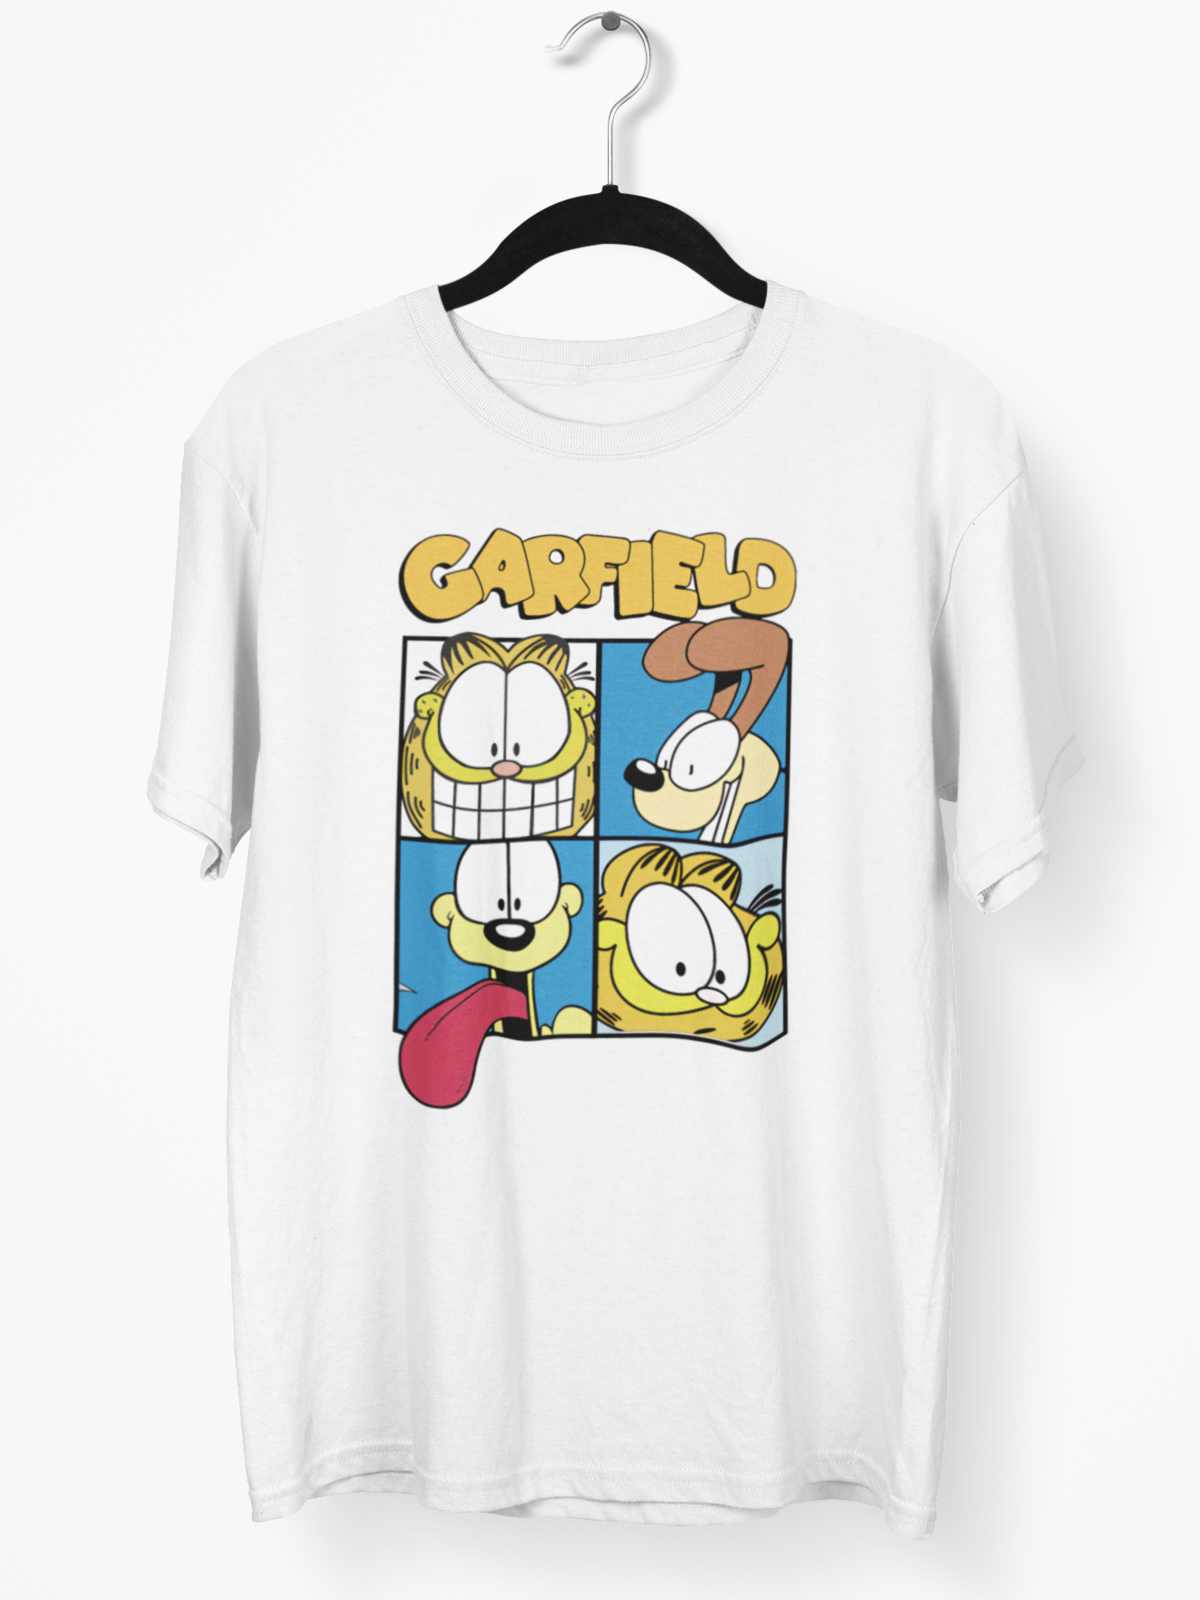 Crazy: Garfield